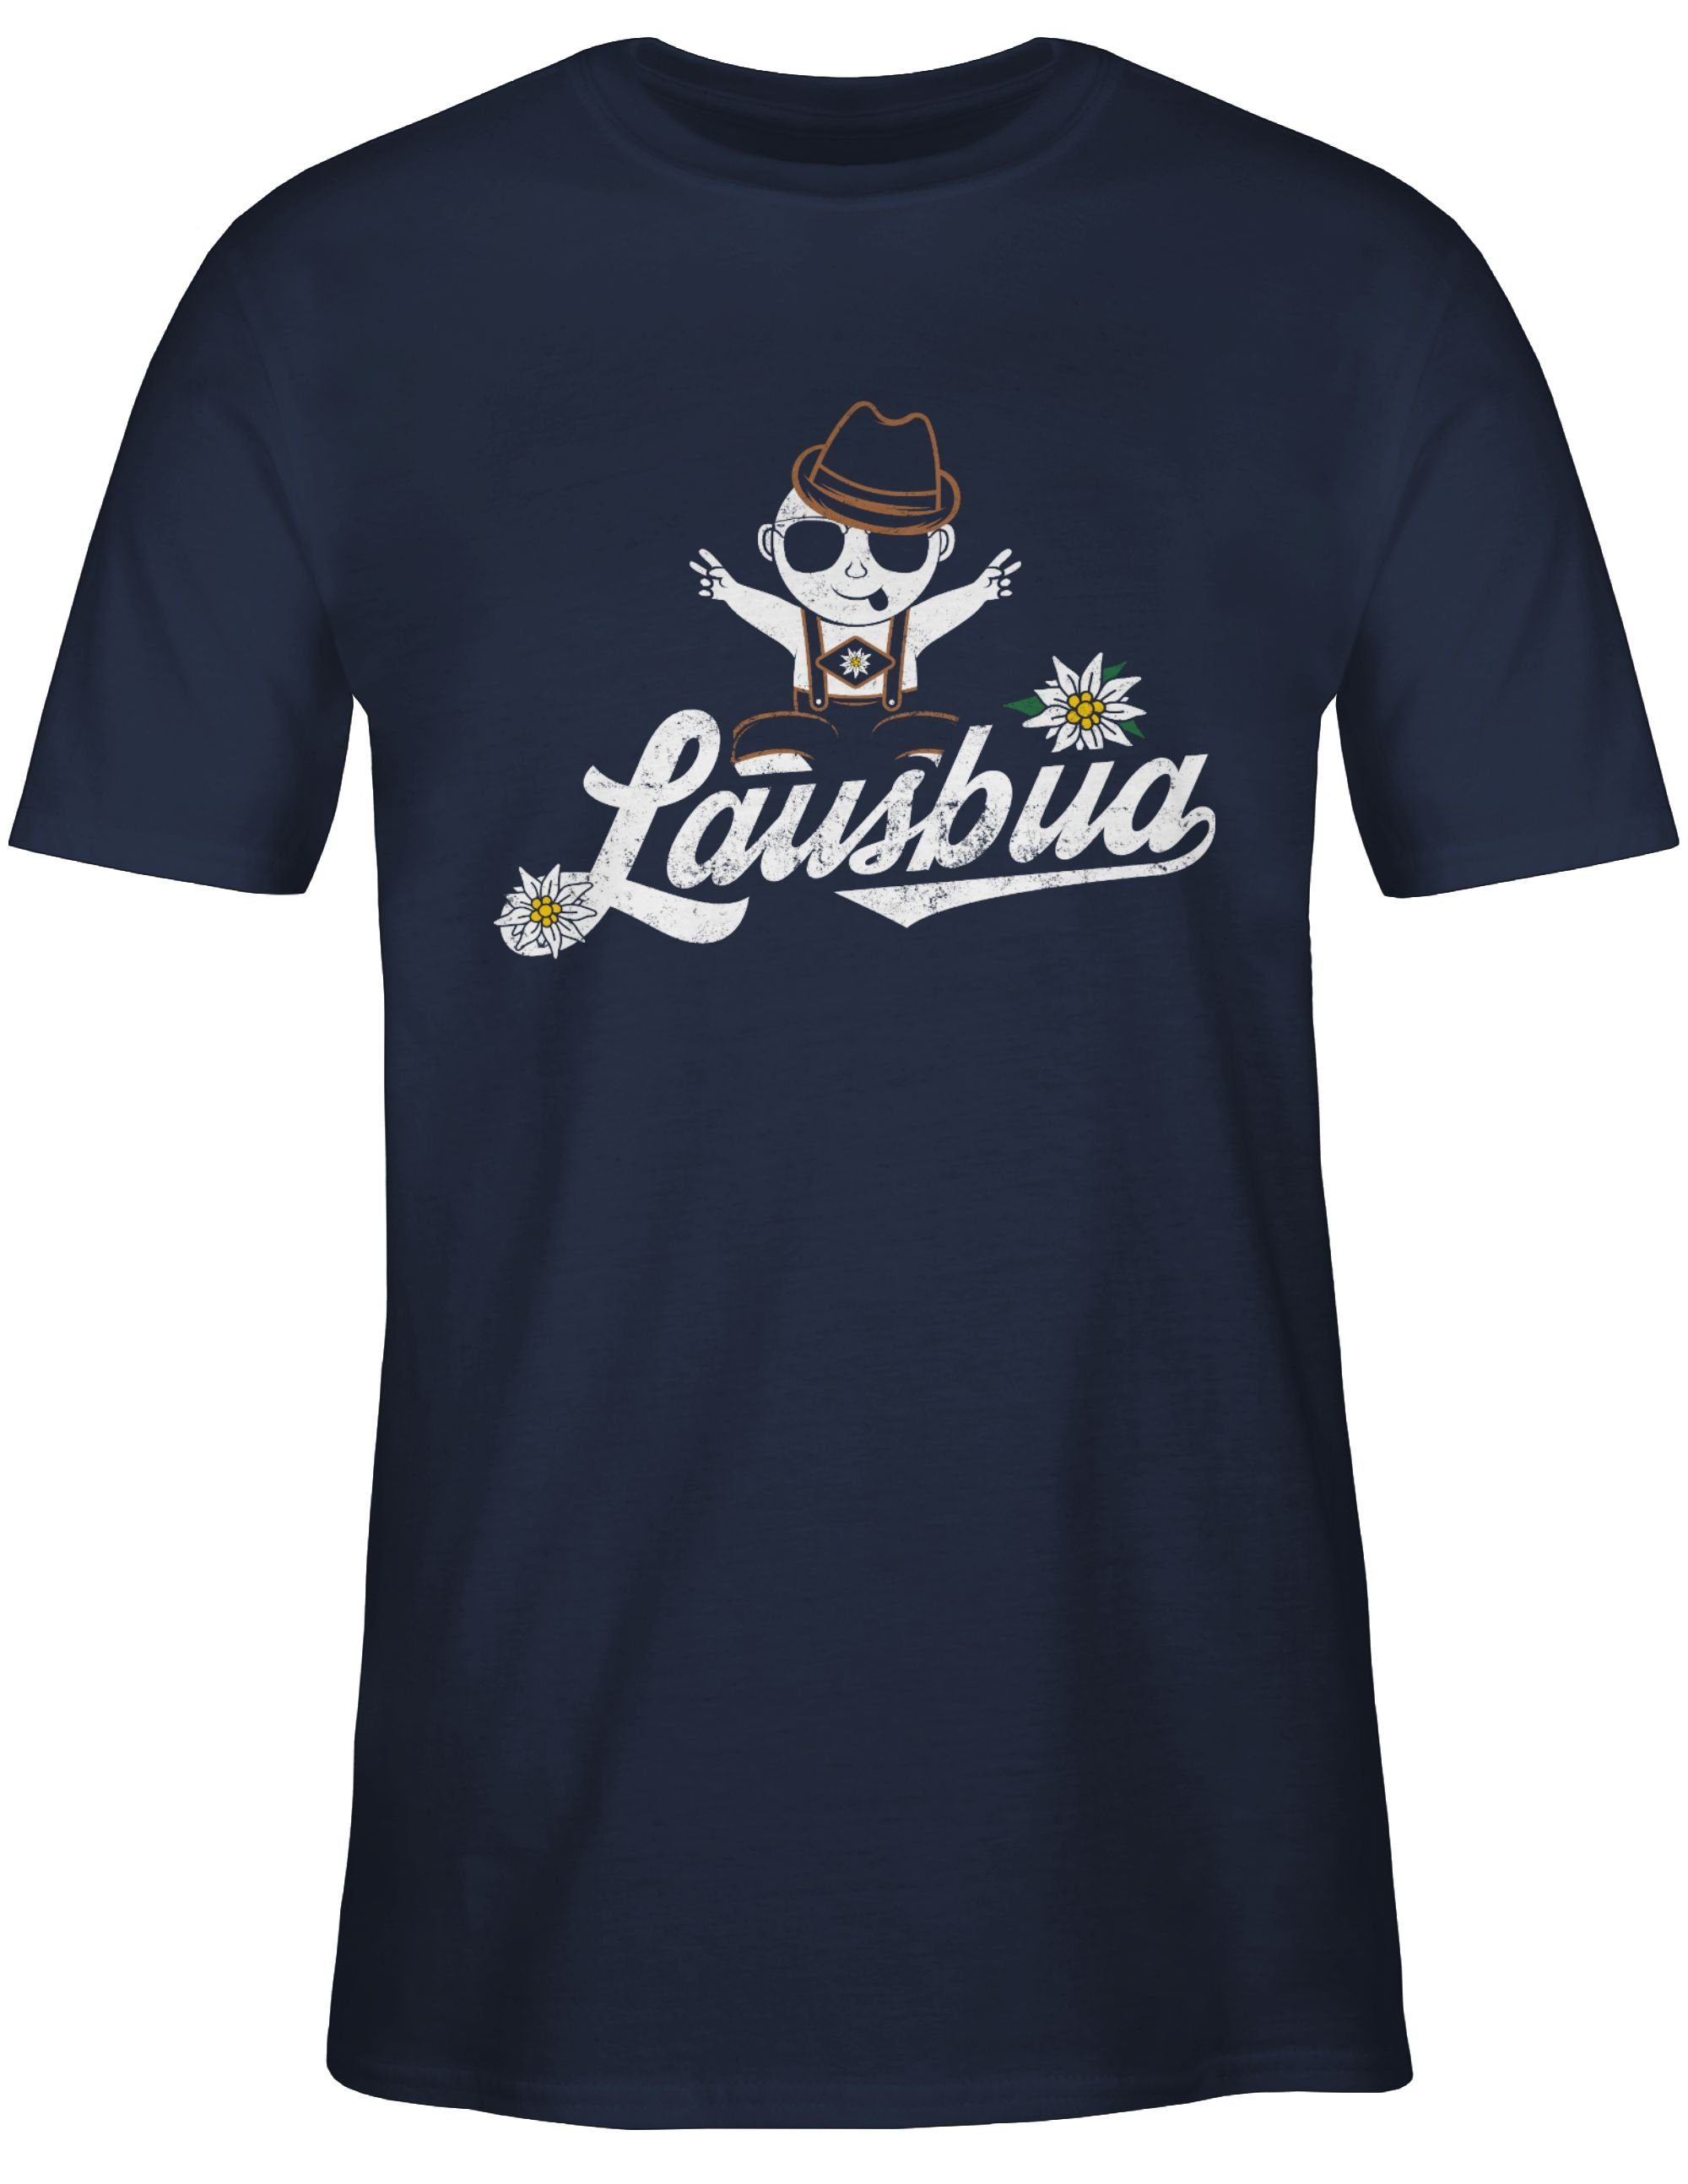 Lustig Witzig 03 Herren Baby Navy Blau Lausbua Mode T-Shirt für Oktoberfest Shirtracer Wiesn I